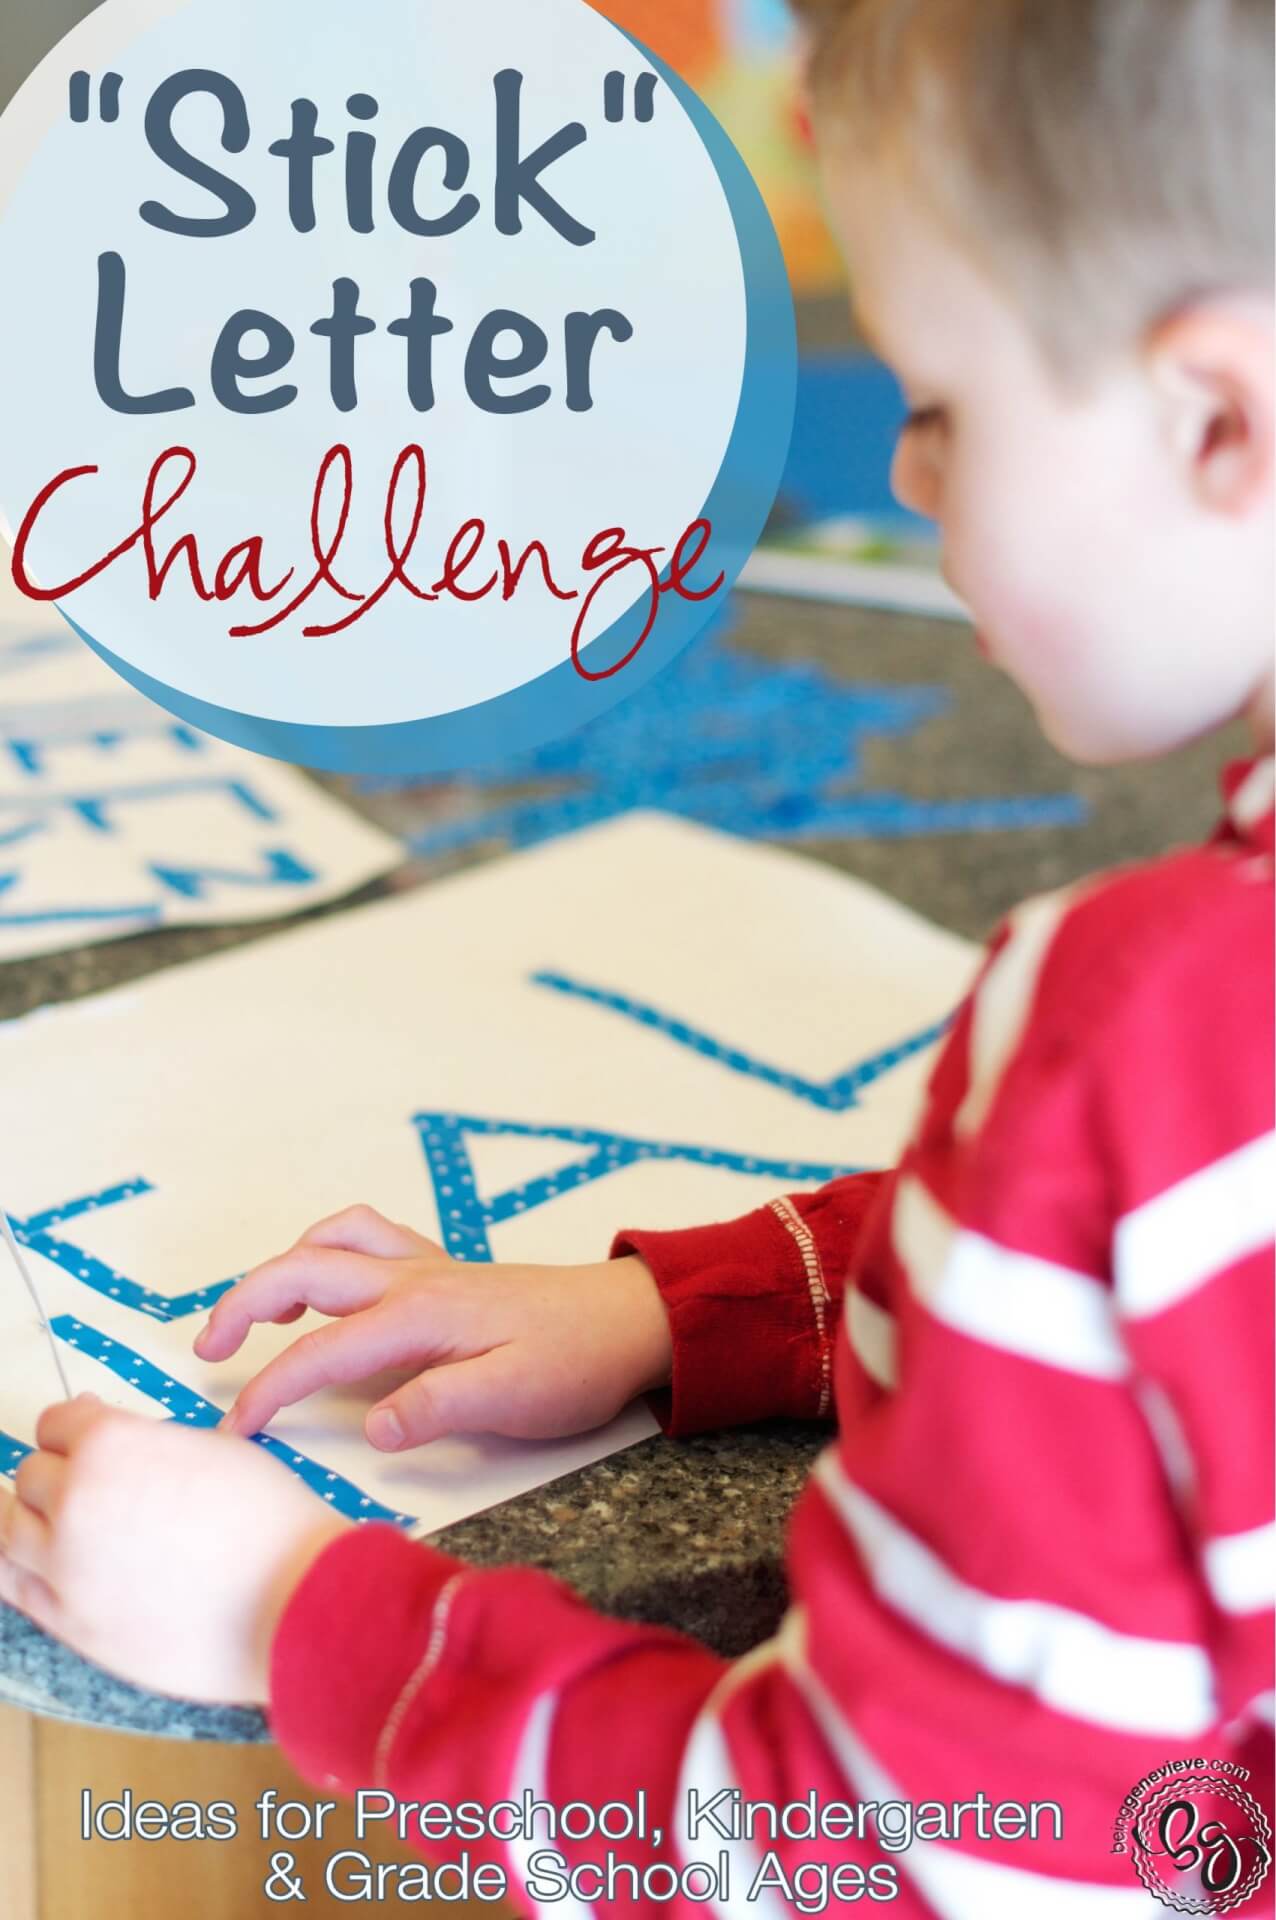 Stick Letter Challenge